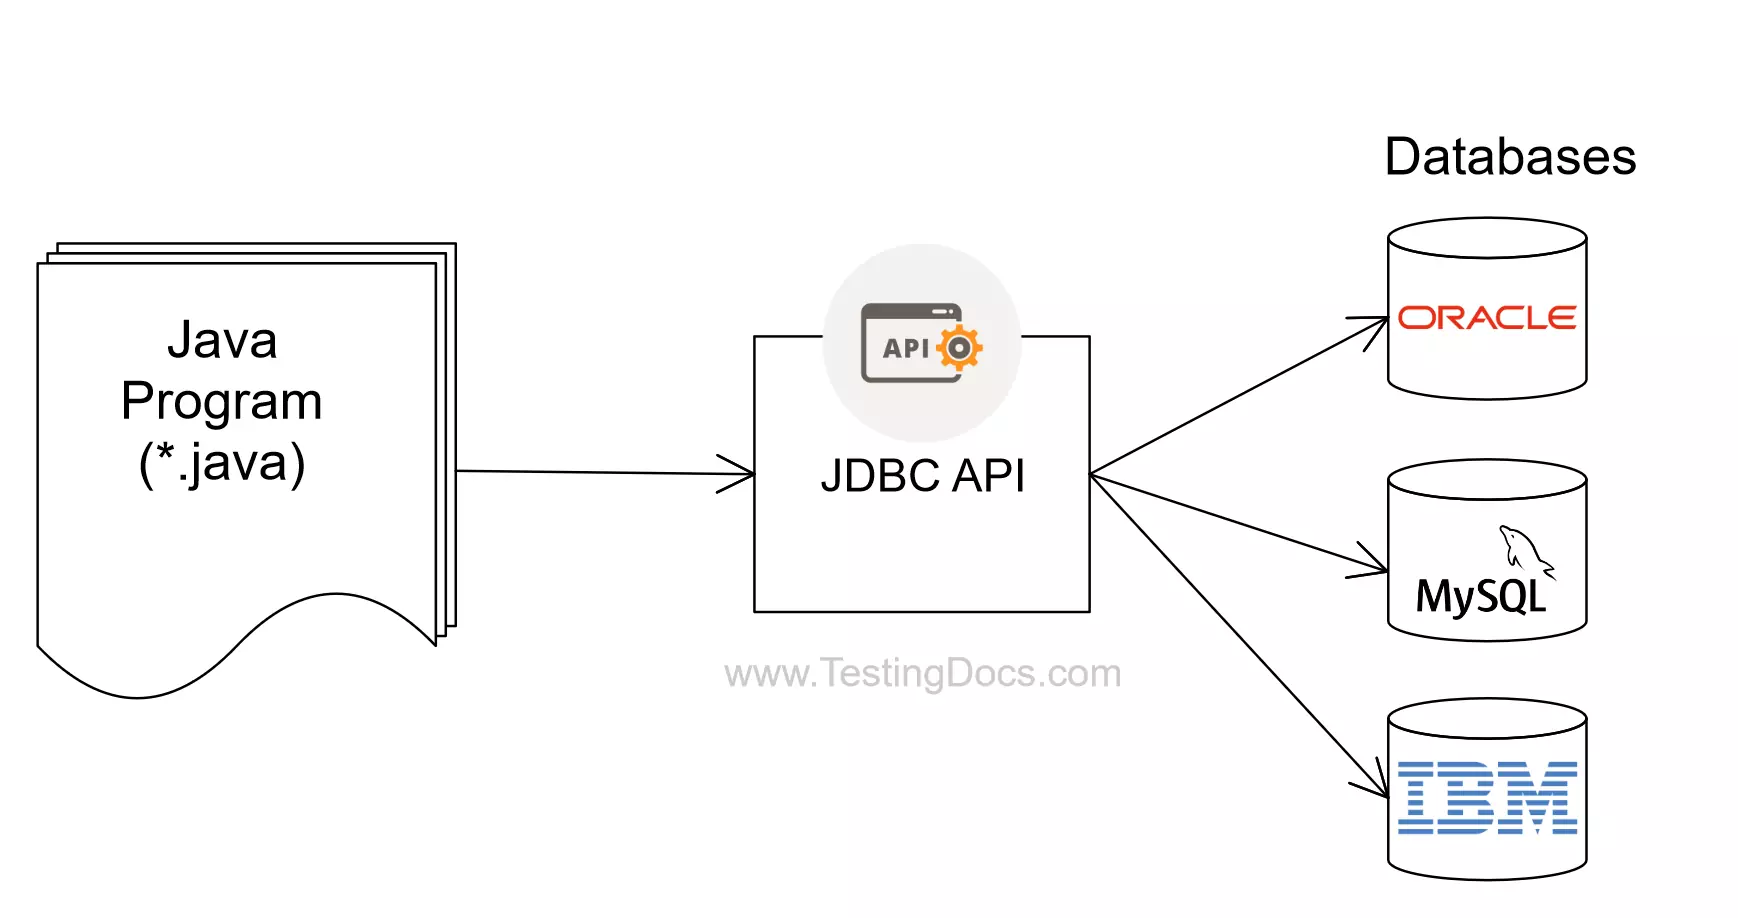 JDBC API